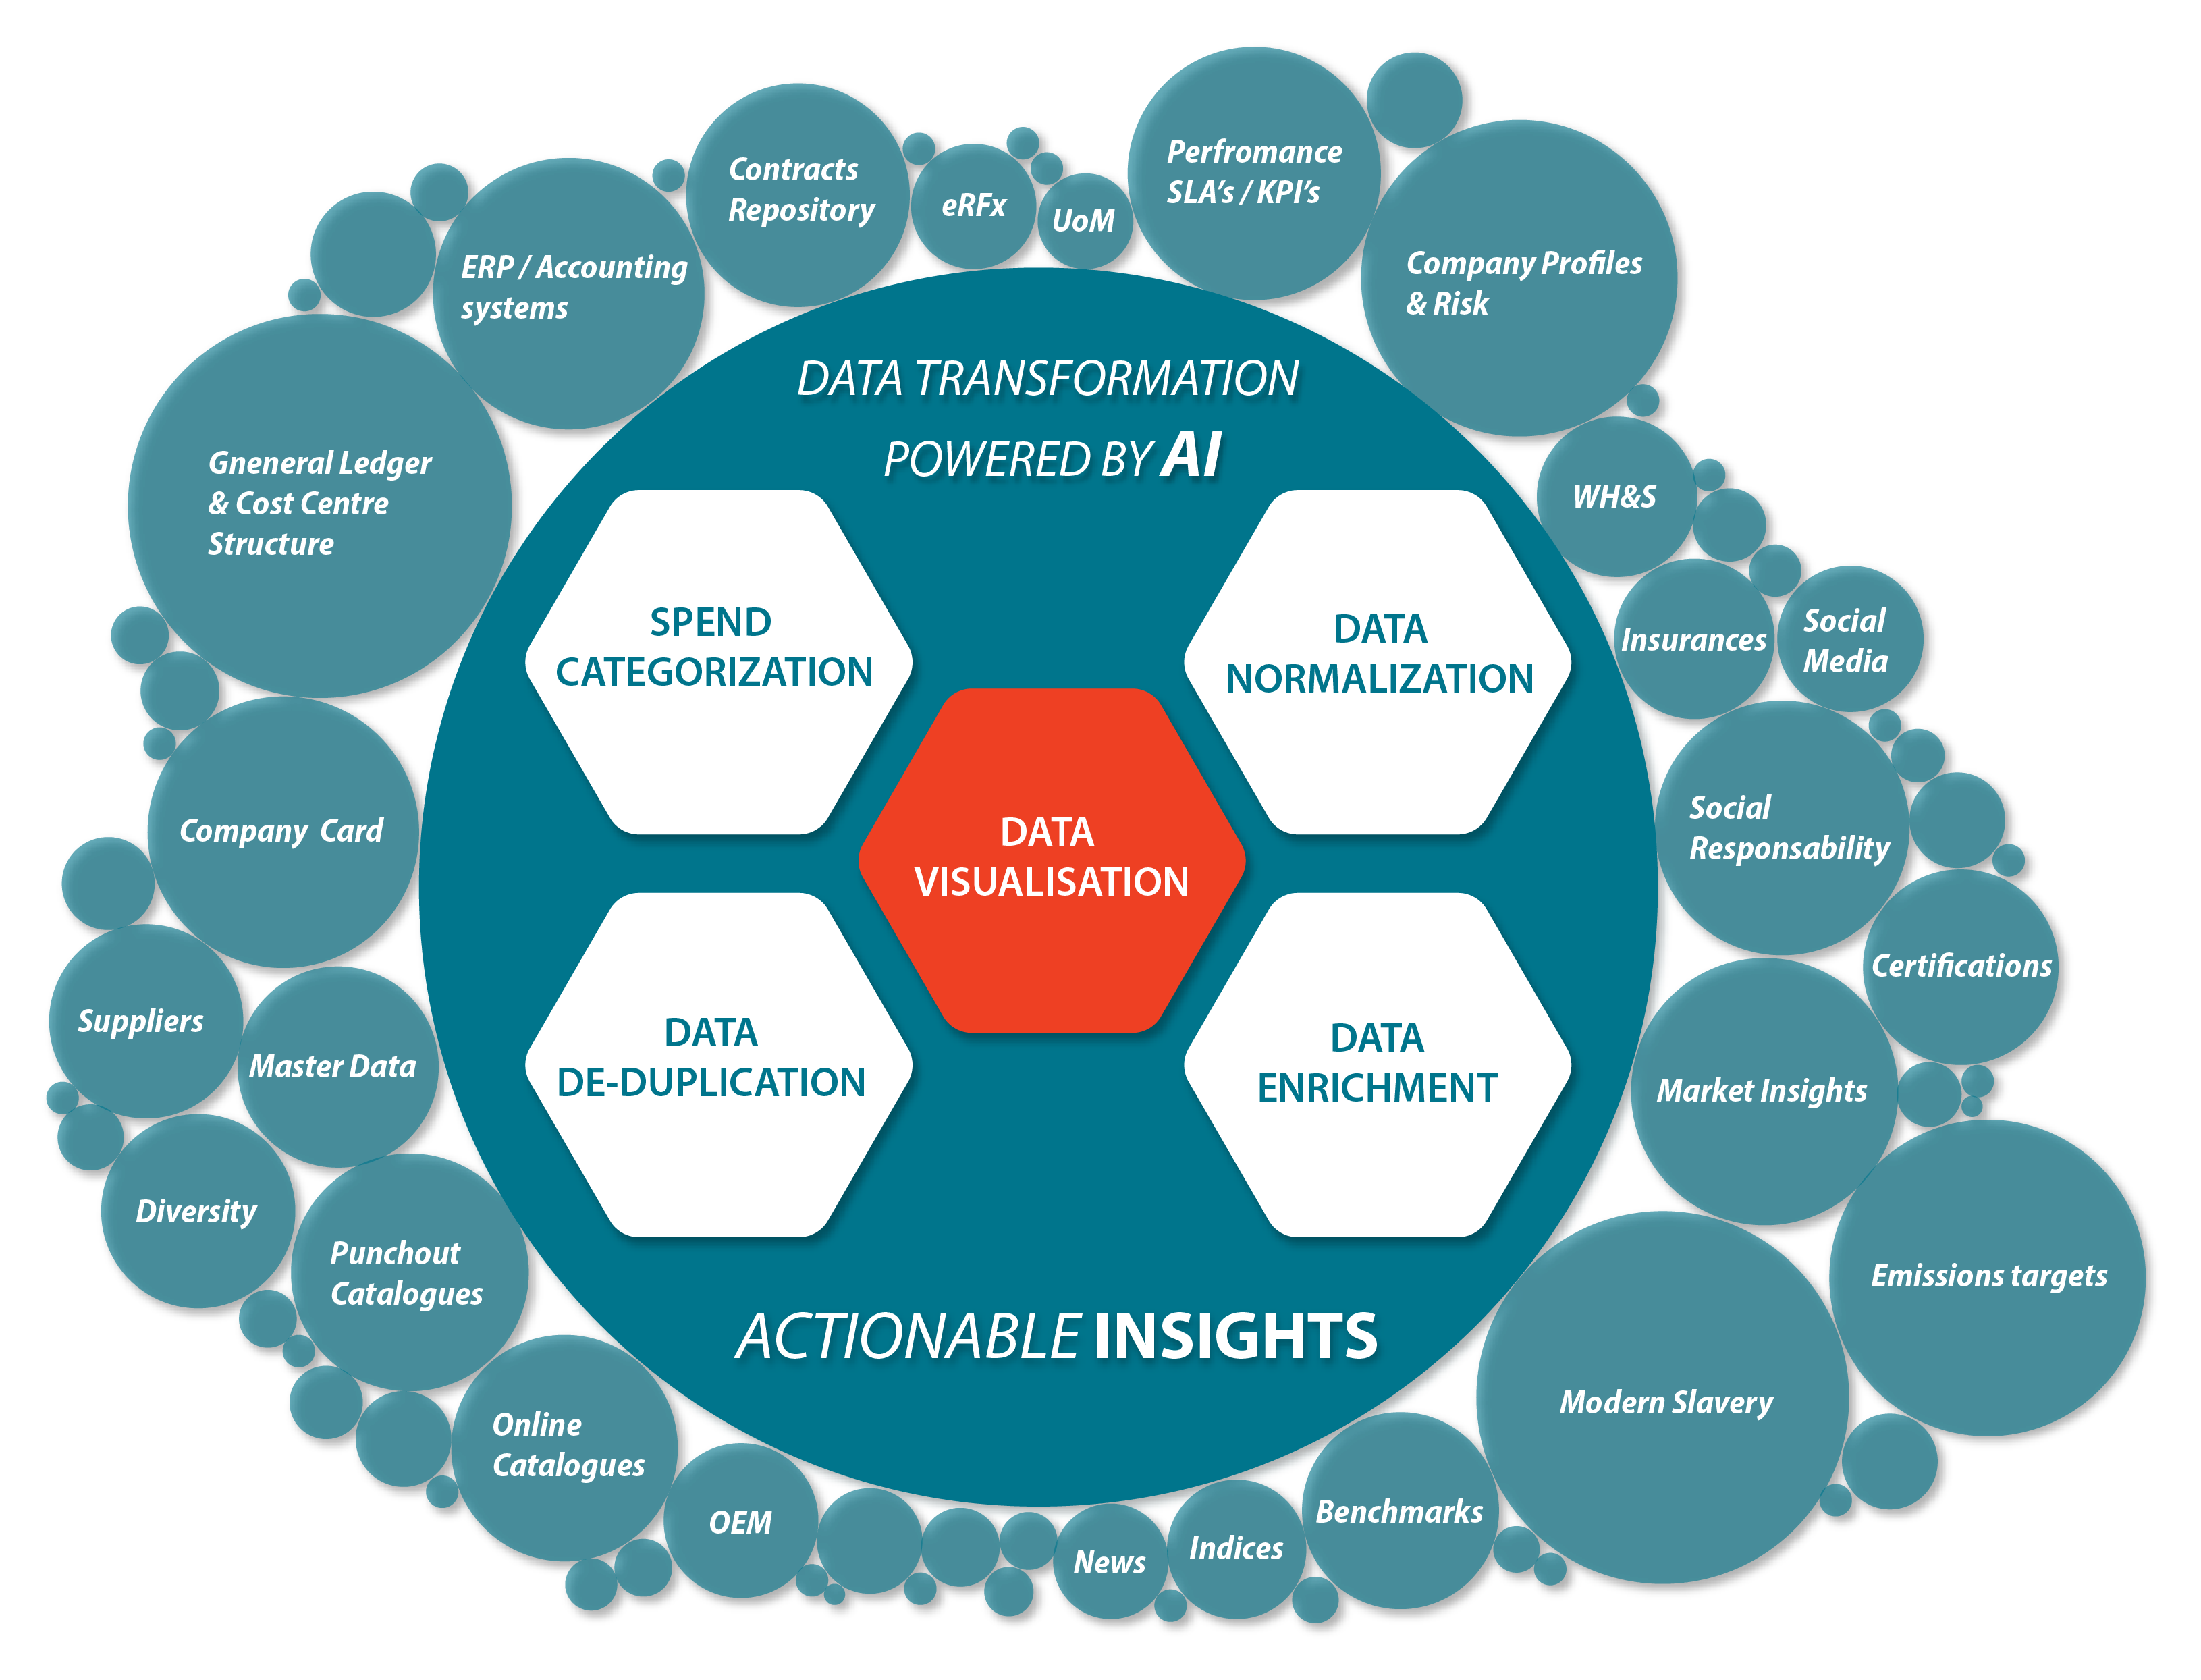 Sagacitas Actionable Insights - Data Services Spend Categorisation Normalisation de-duplication enrichment visualisation